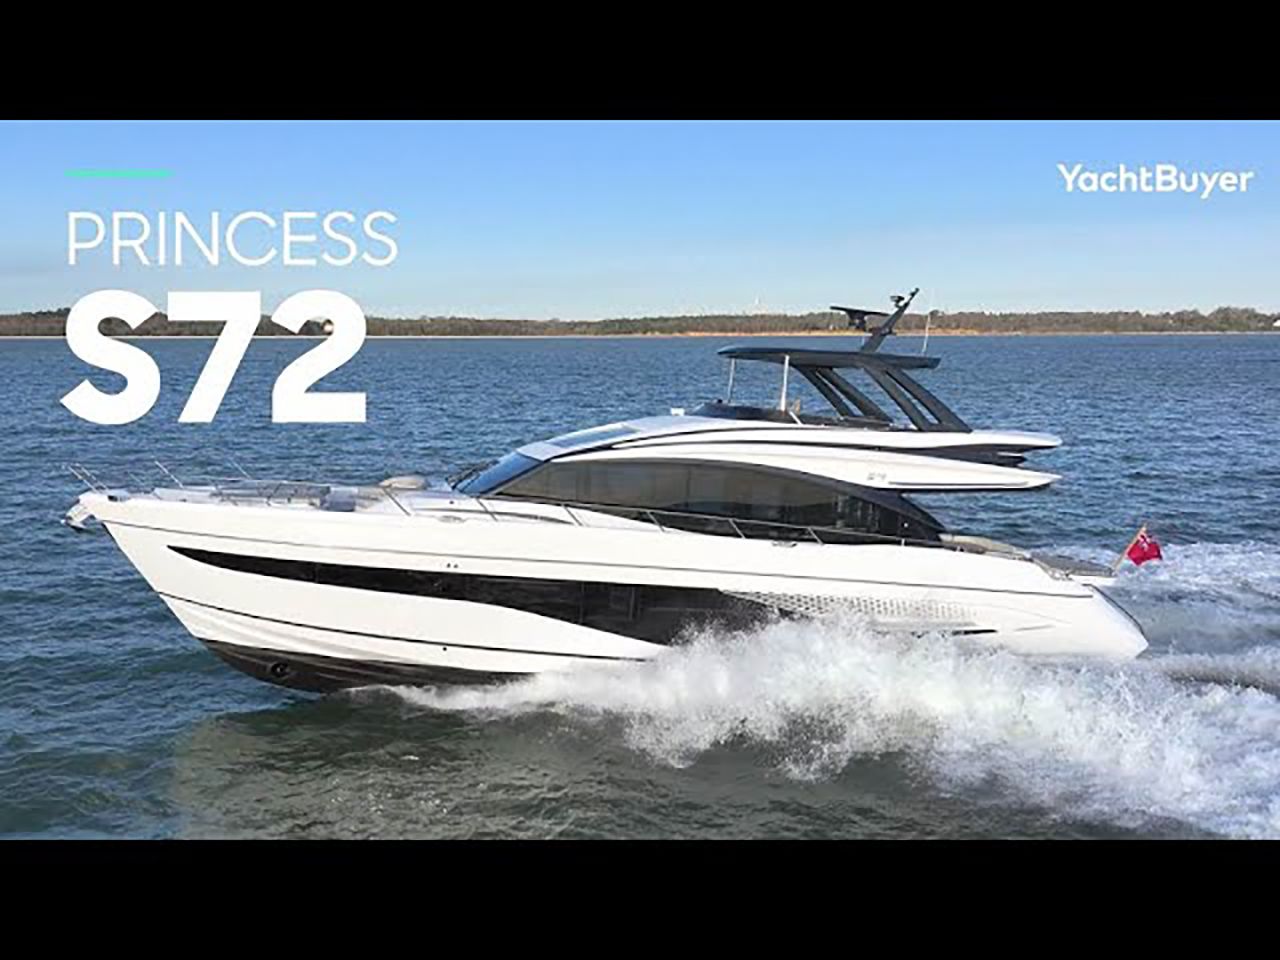 Princess S72 游艇体验展示